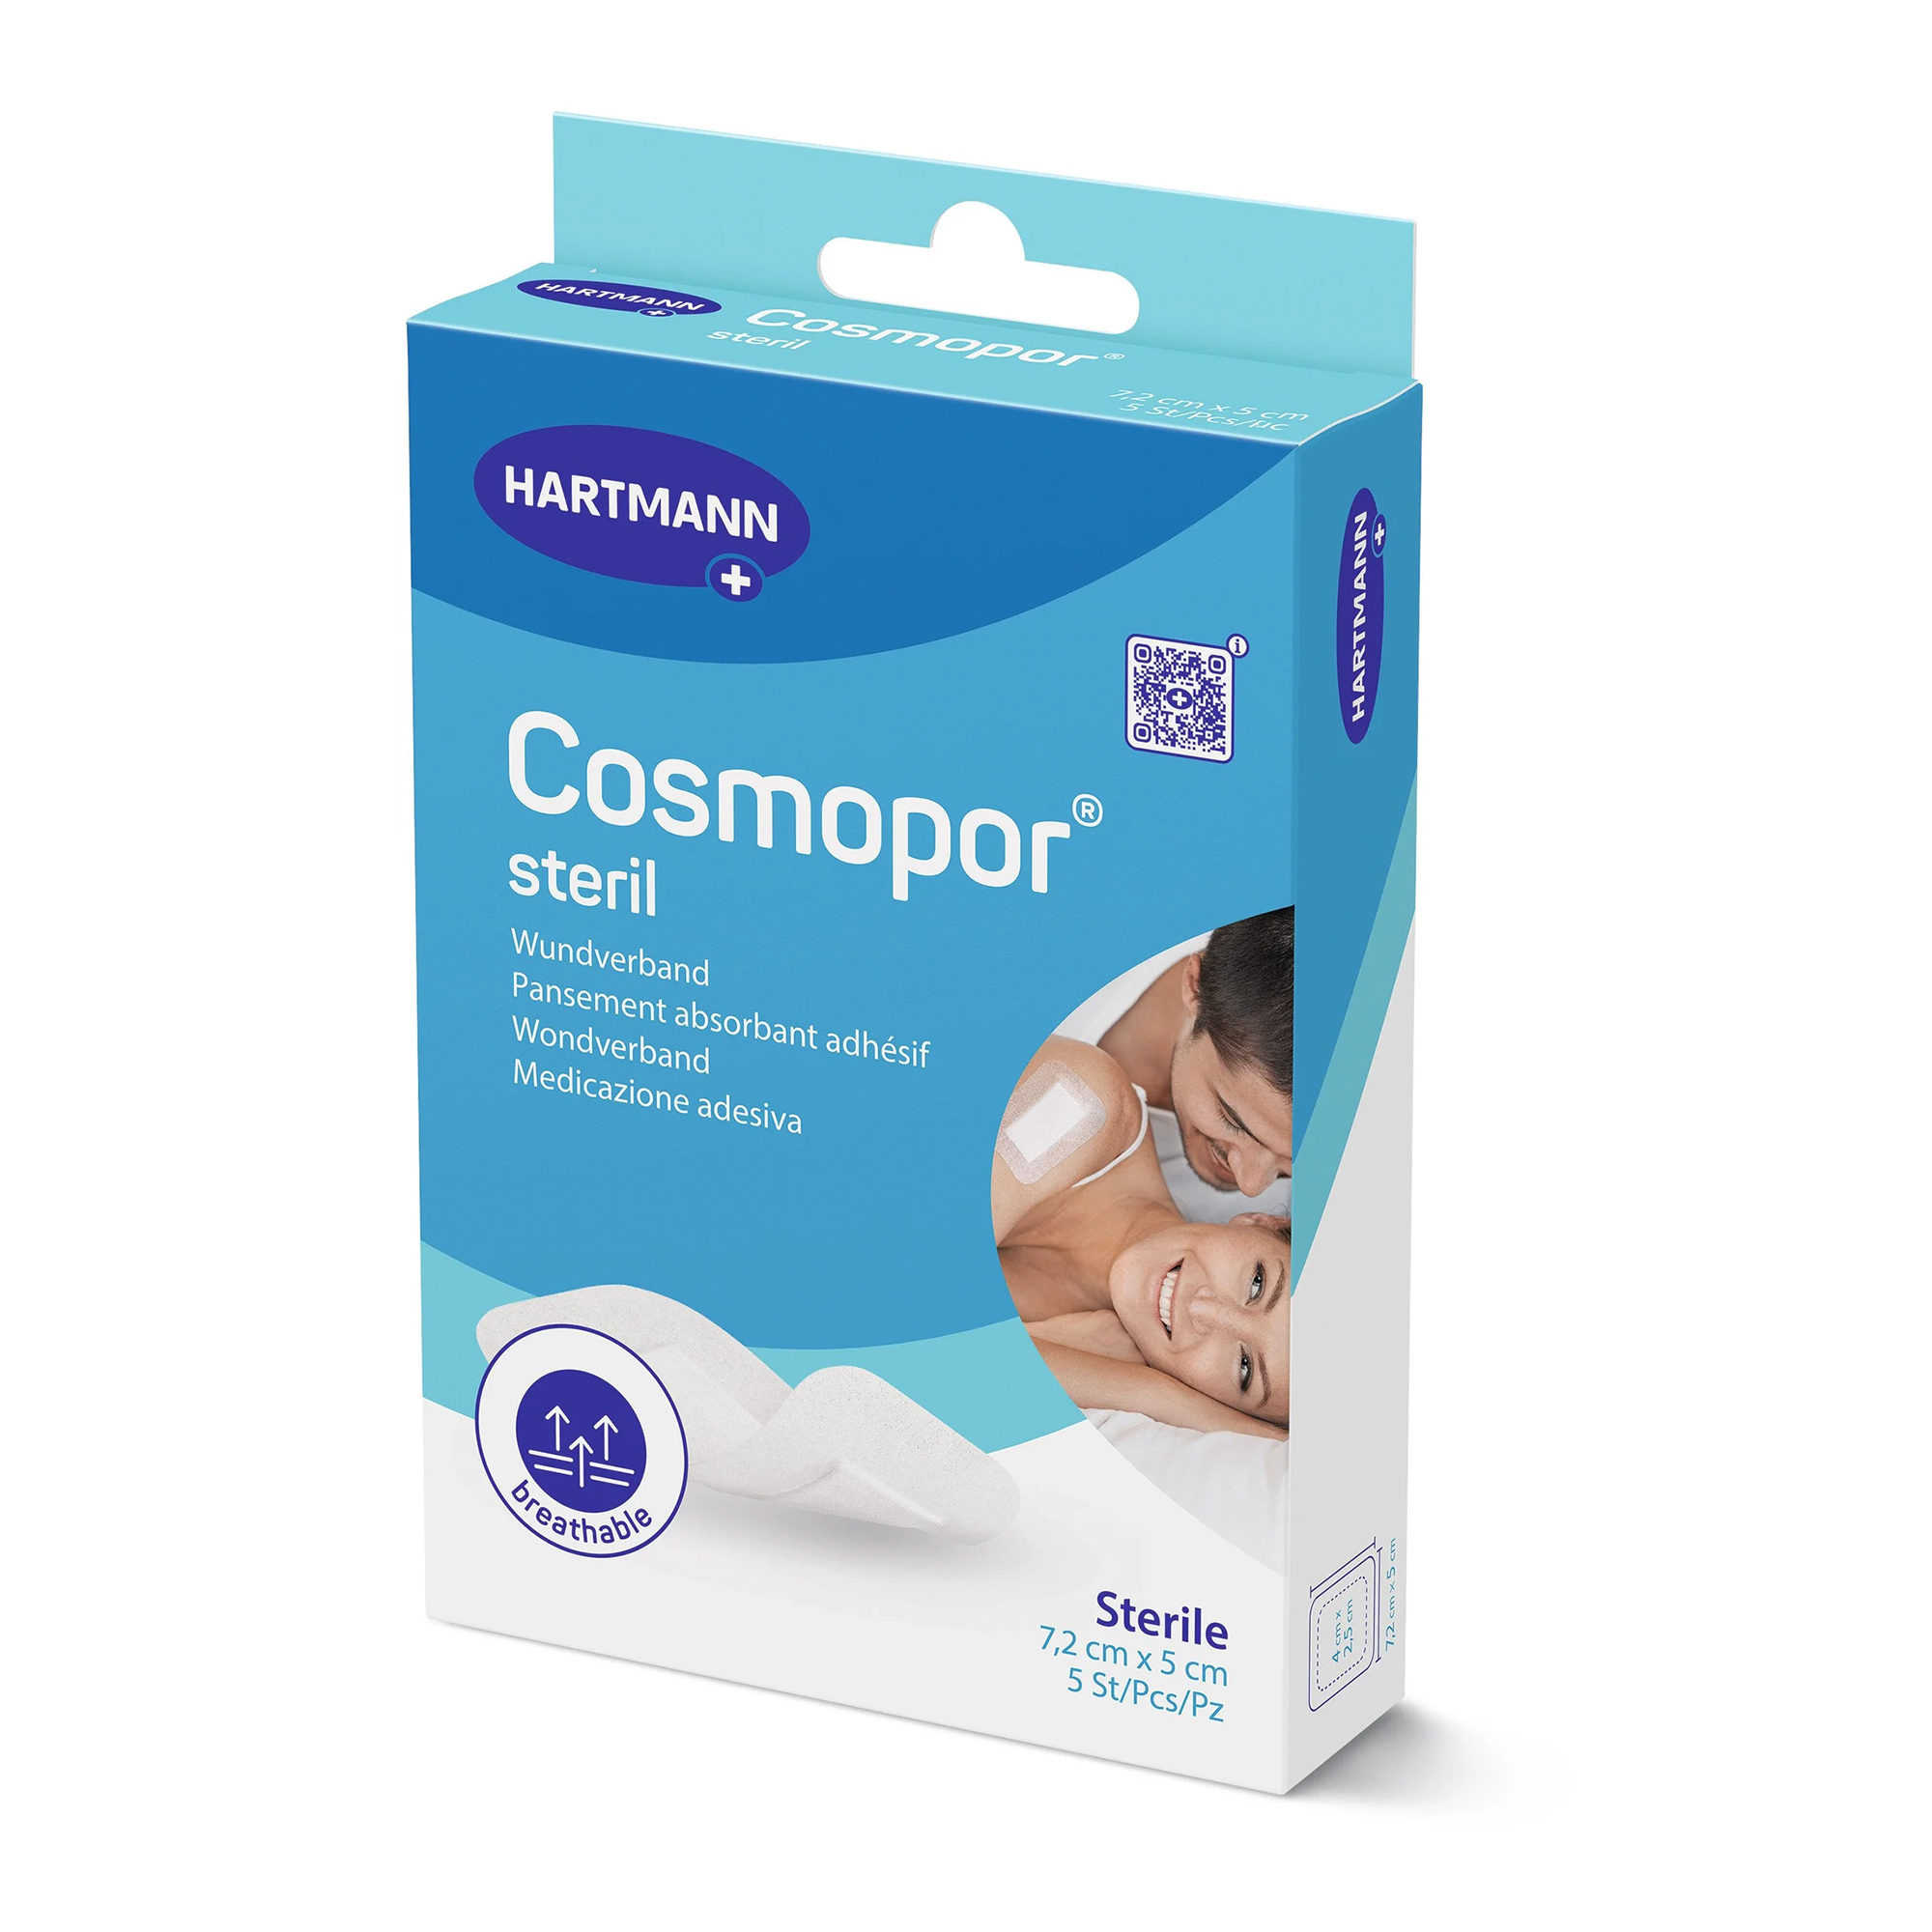 Hartmann Cosmopor® Sterile Wound Dressing 7.2 x 5 cm, 25 pieces